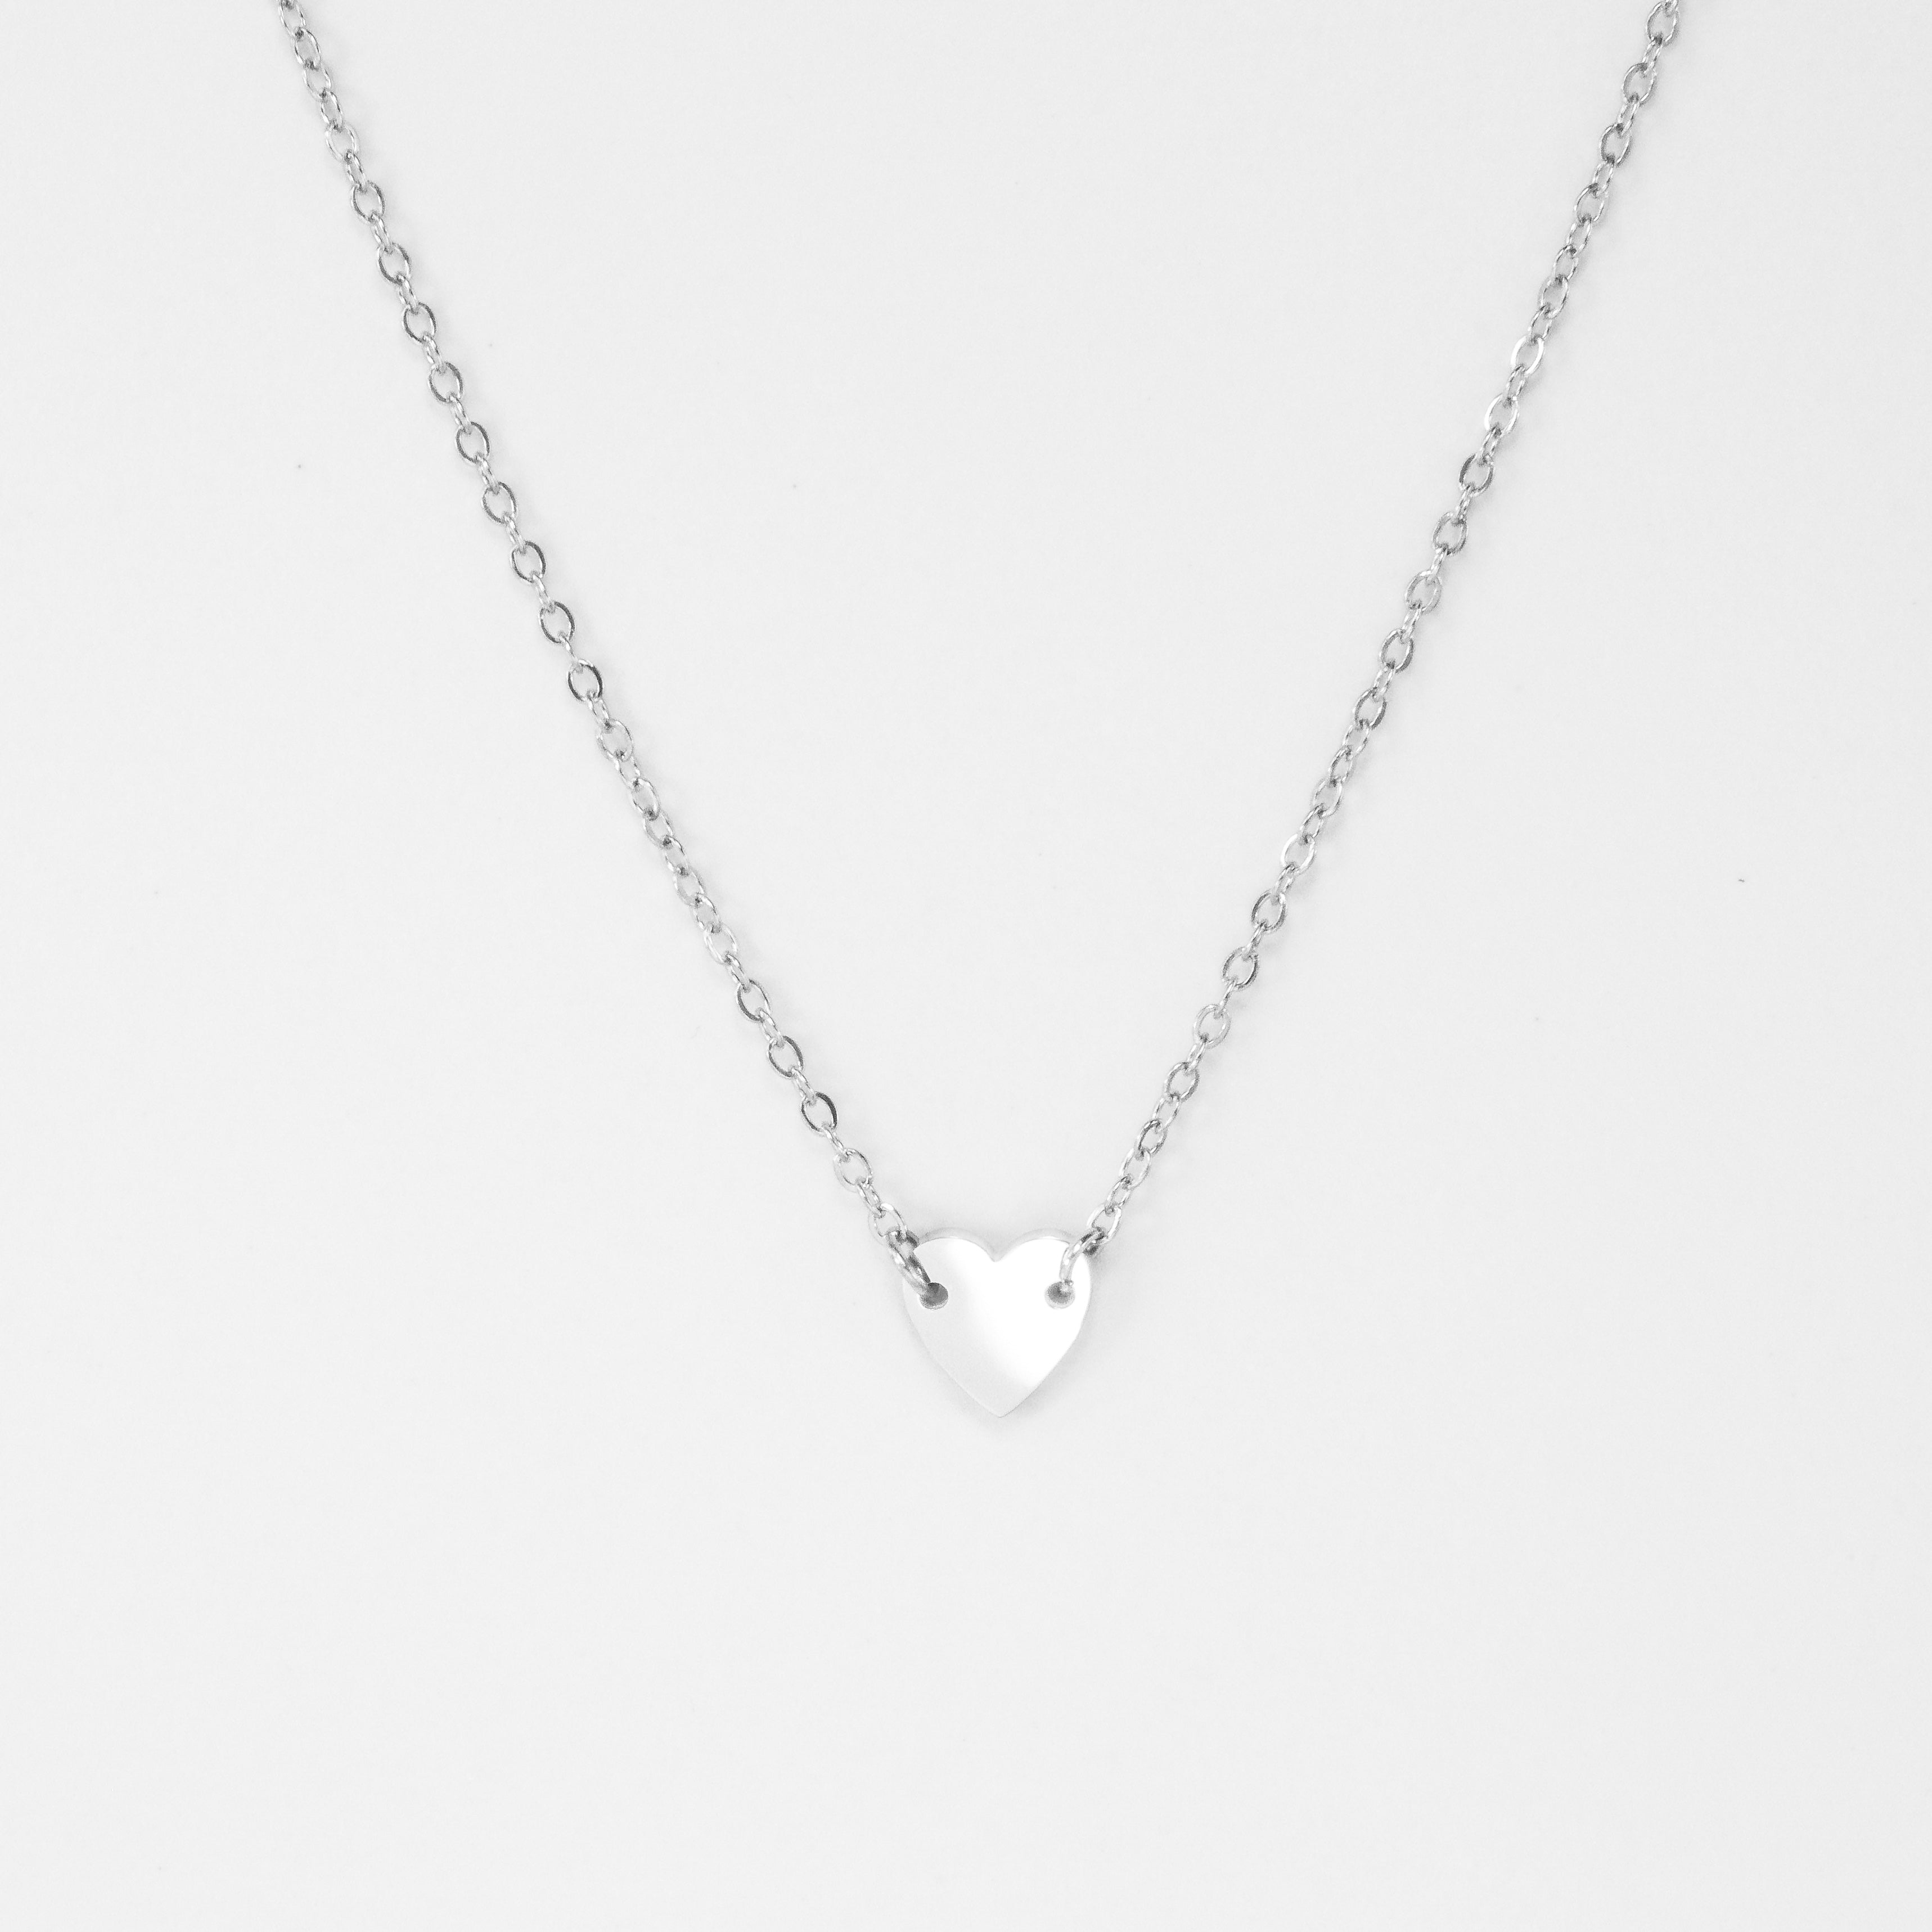 Delicate Silver Heart Necklace